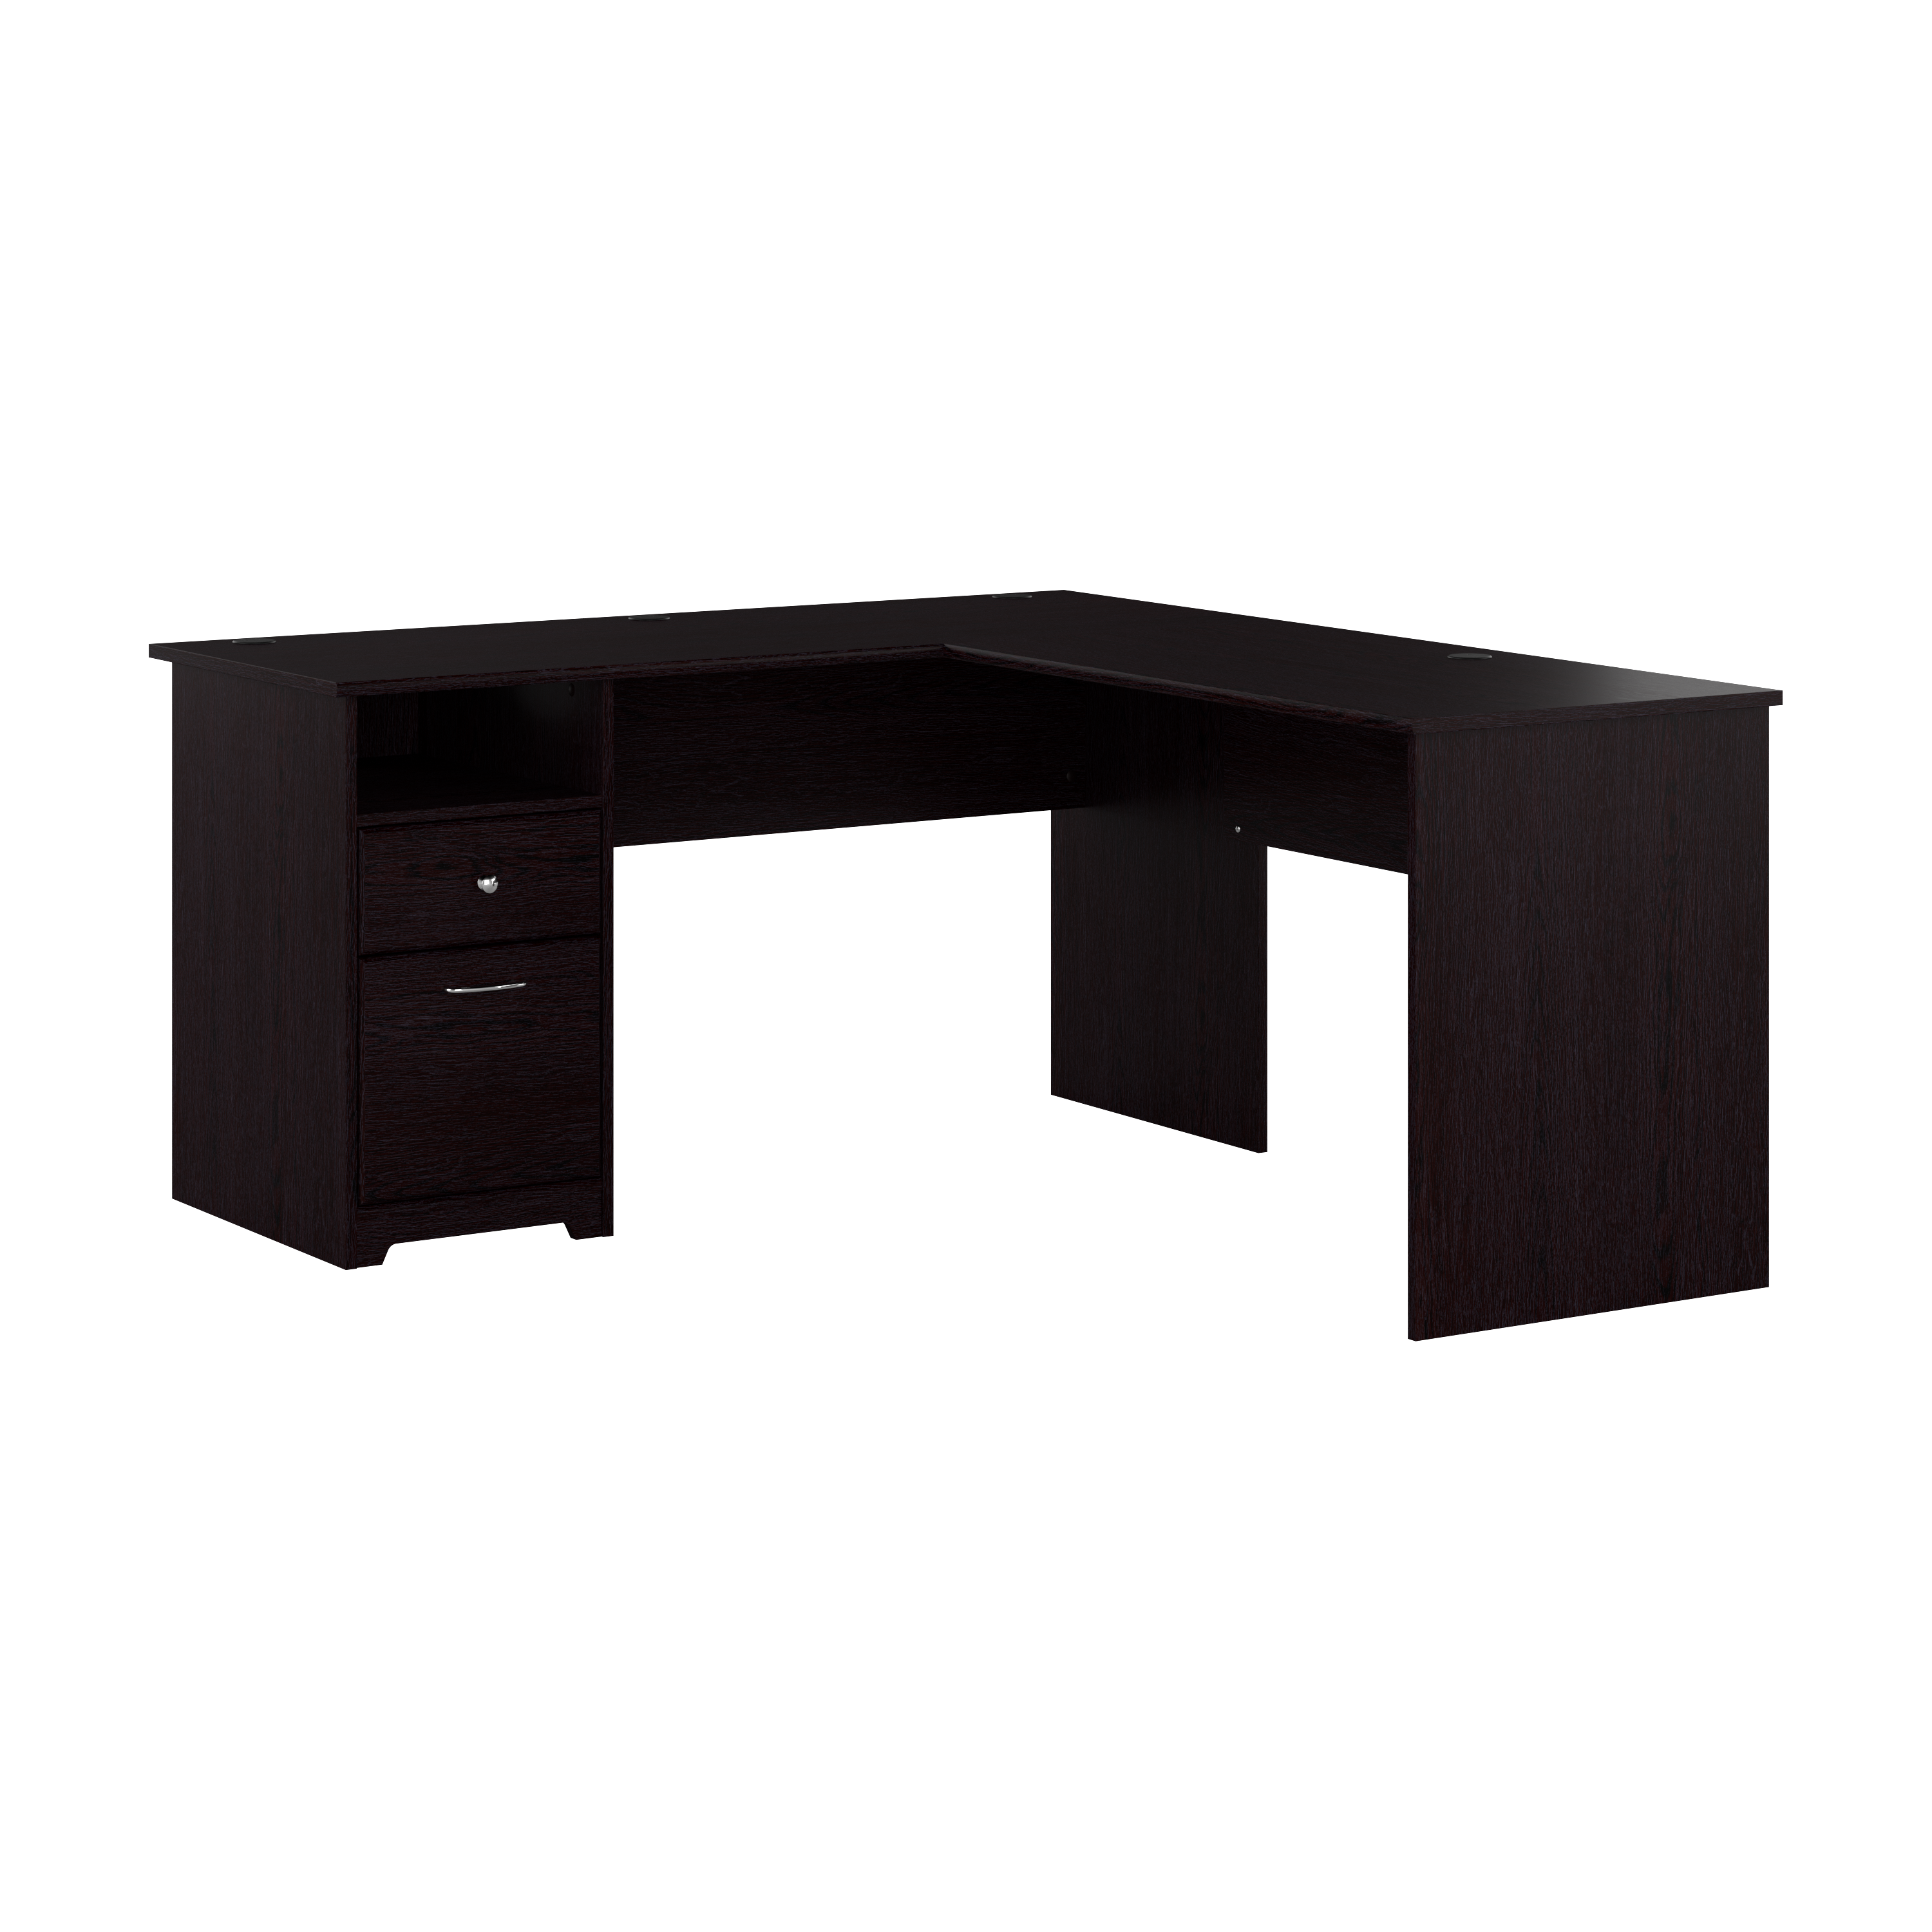 Shop Bush Furniture Cabot 60W L Shaped Computer Desk with Drawers 02 CAB044EPO #color_espresso oak